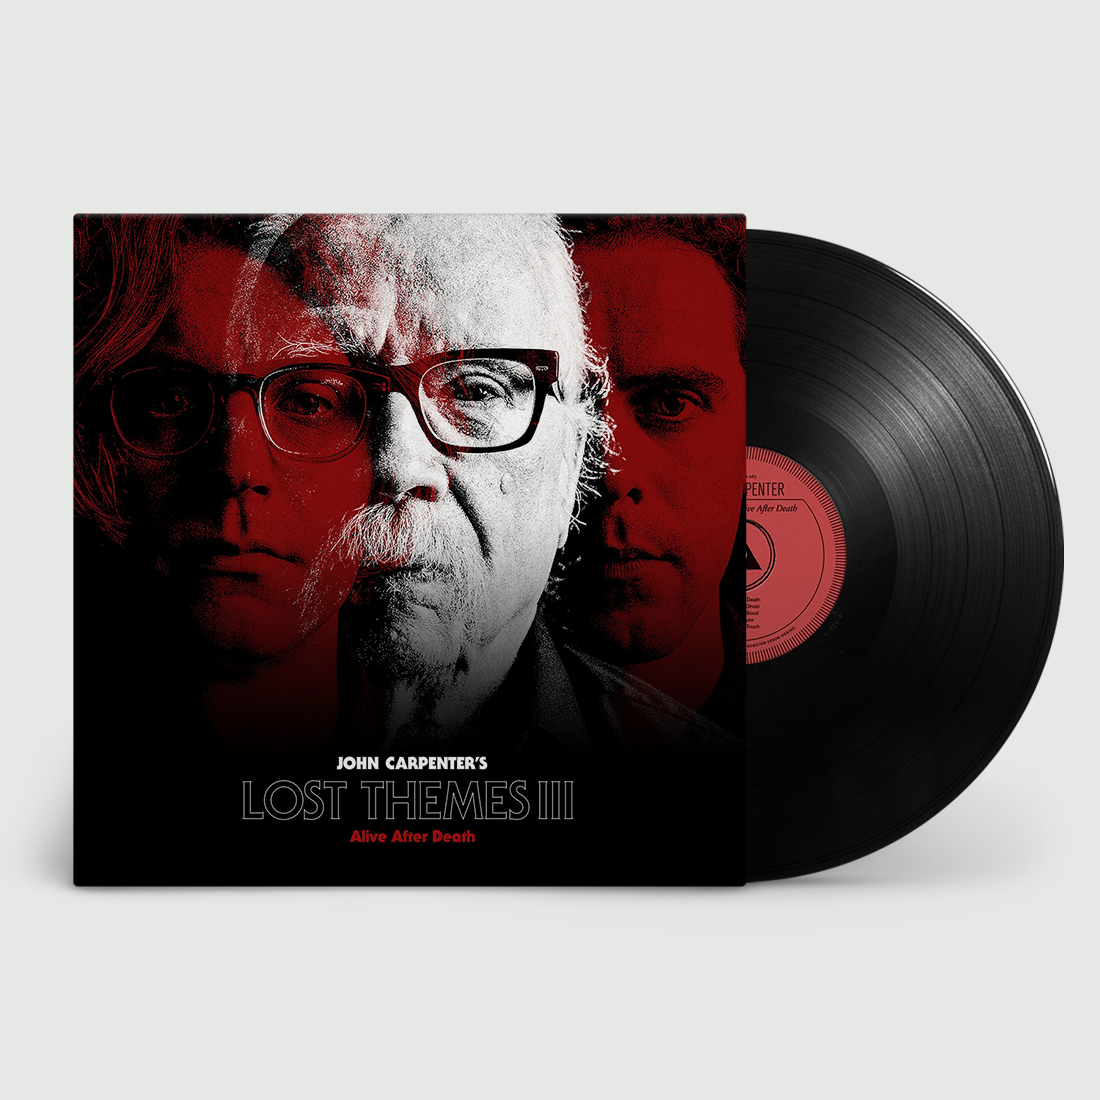 Lost Themes III: Vinyl LP